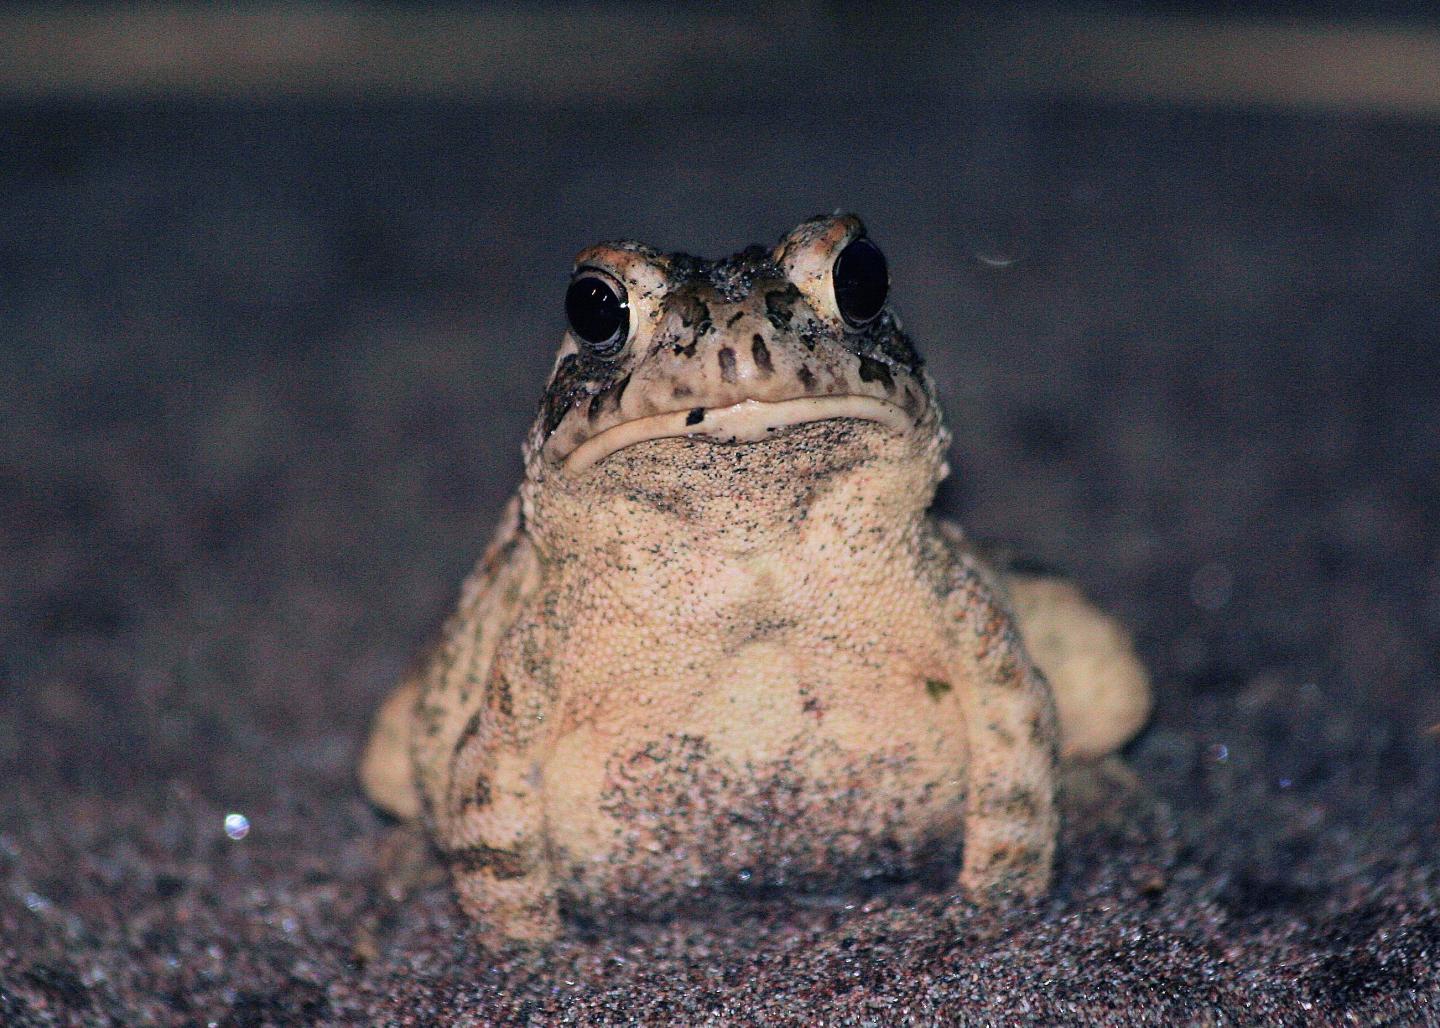 Fowler's Toads